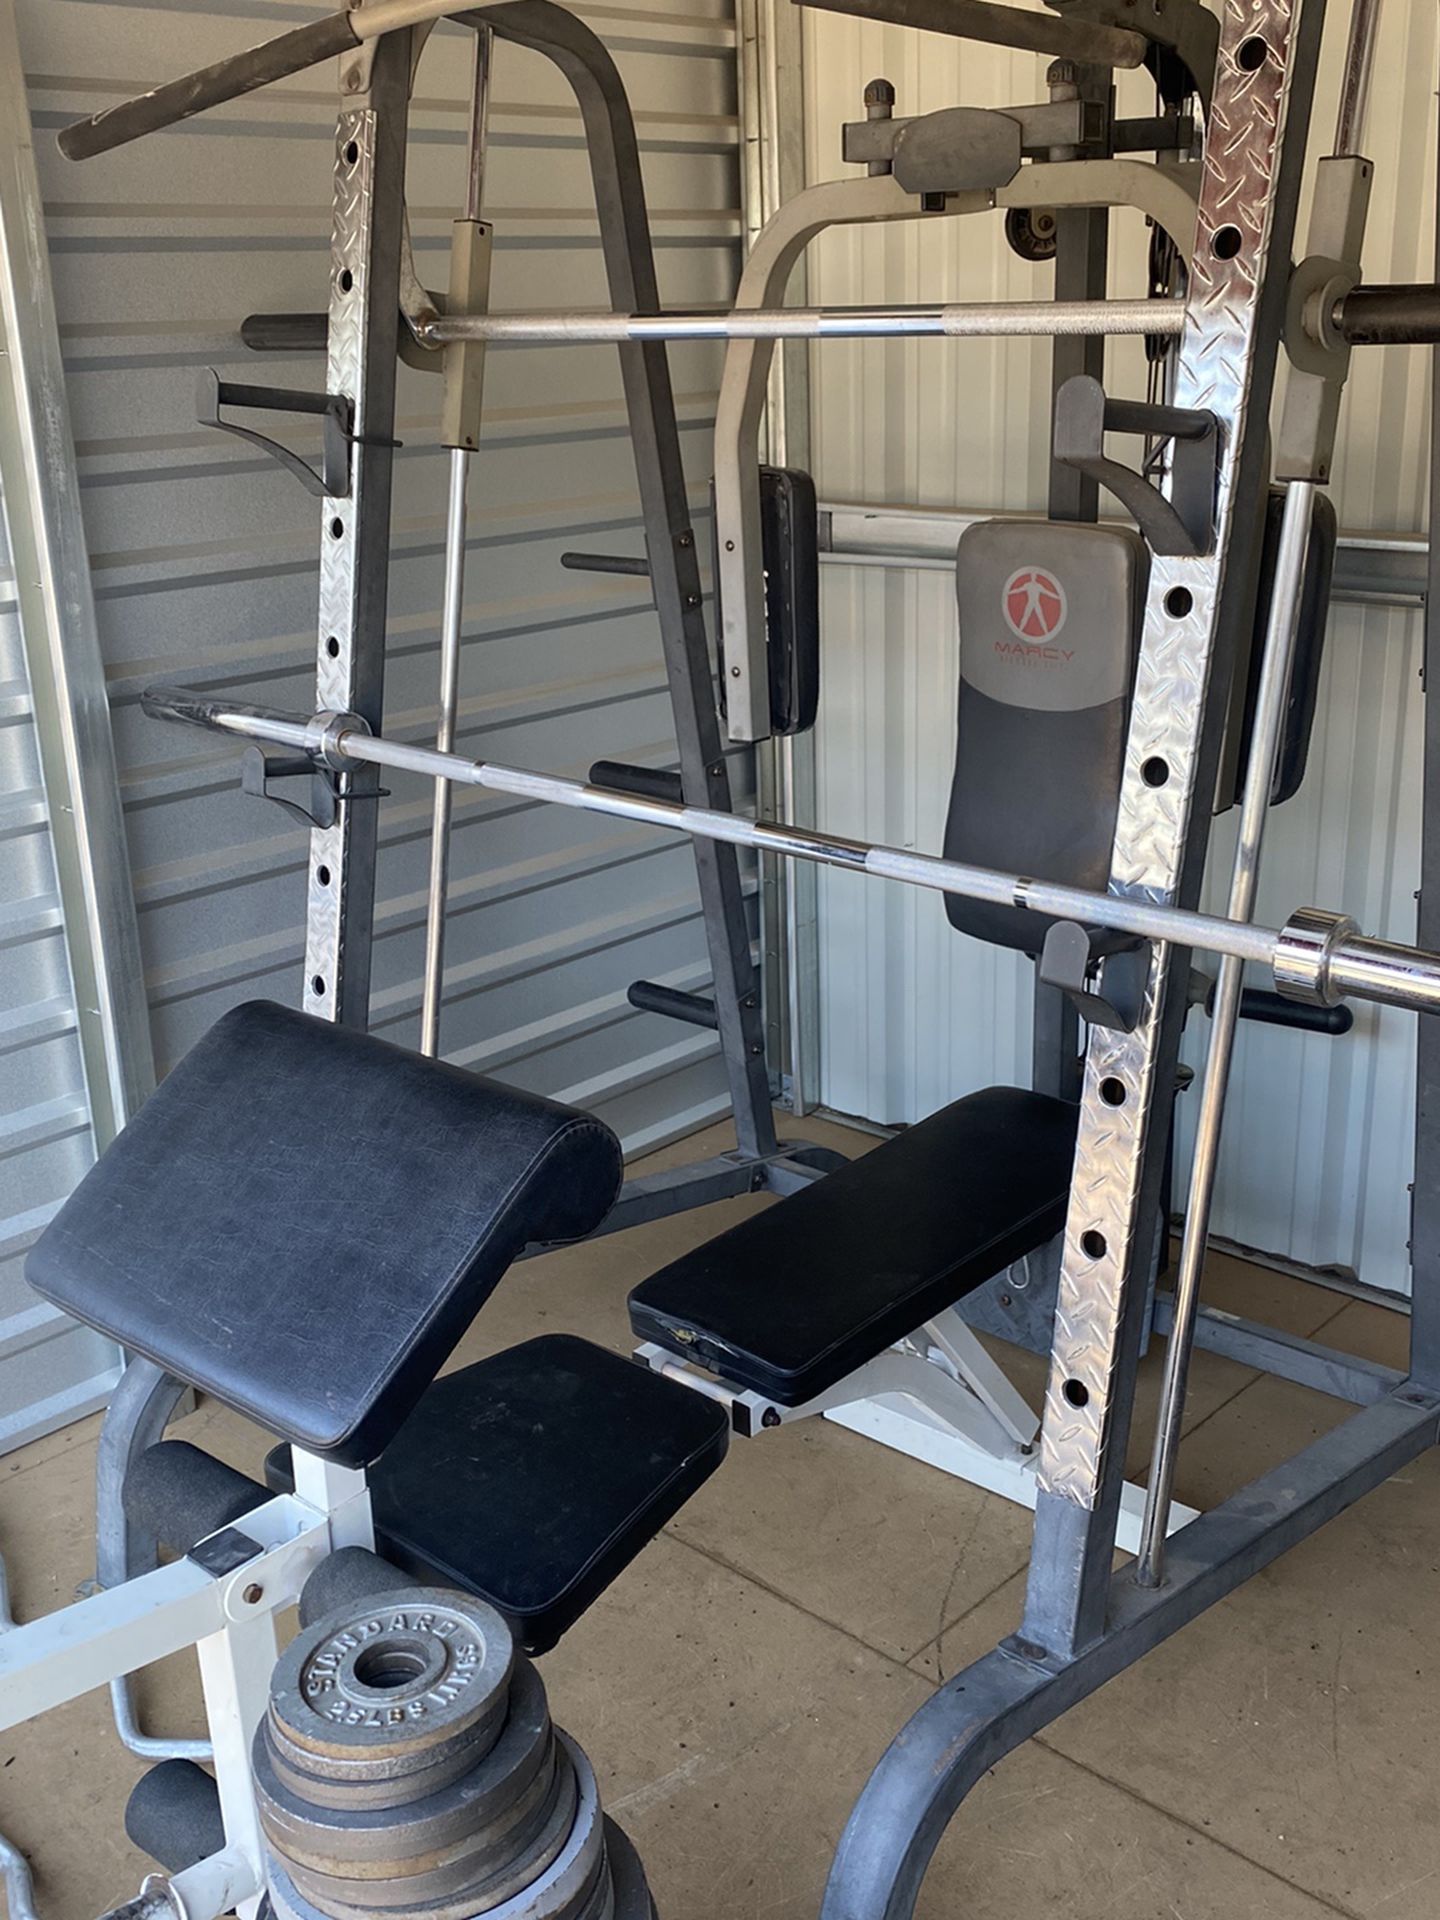 Olympic Smith Machine Home Gym Setup